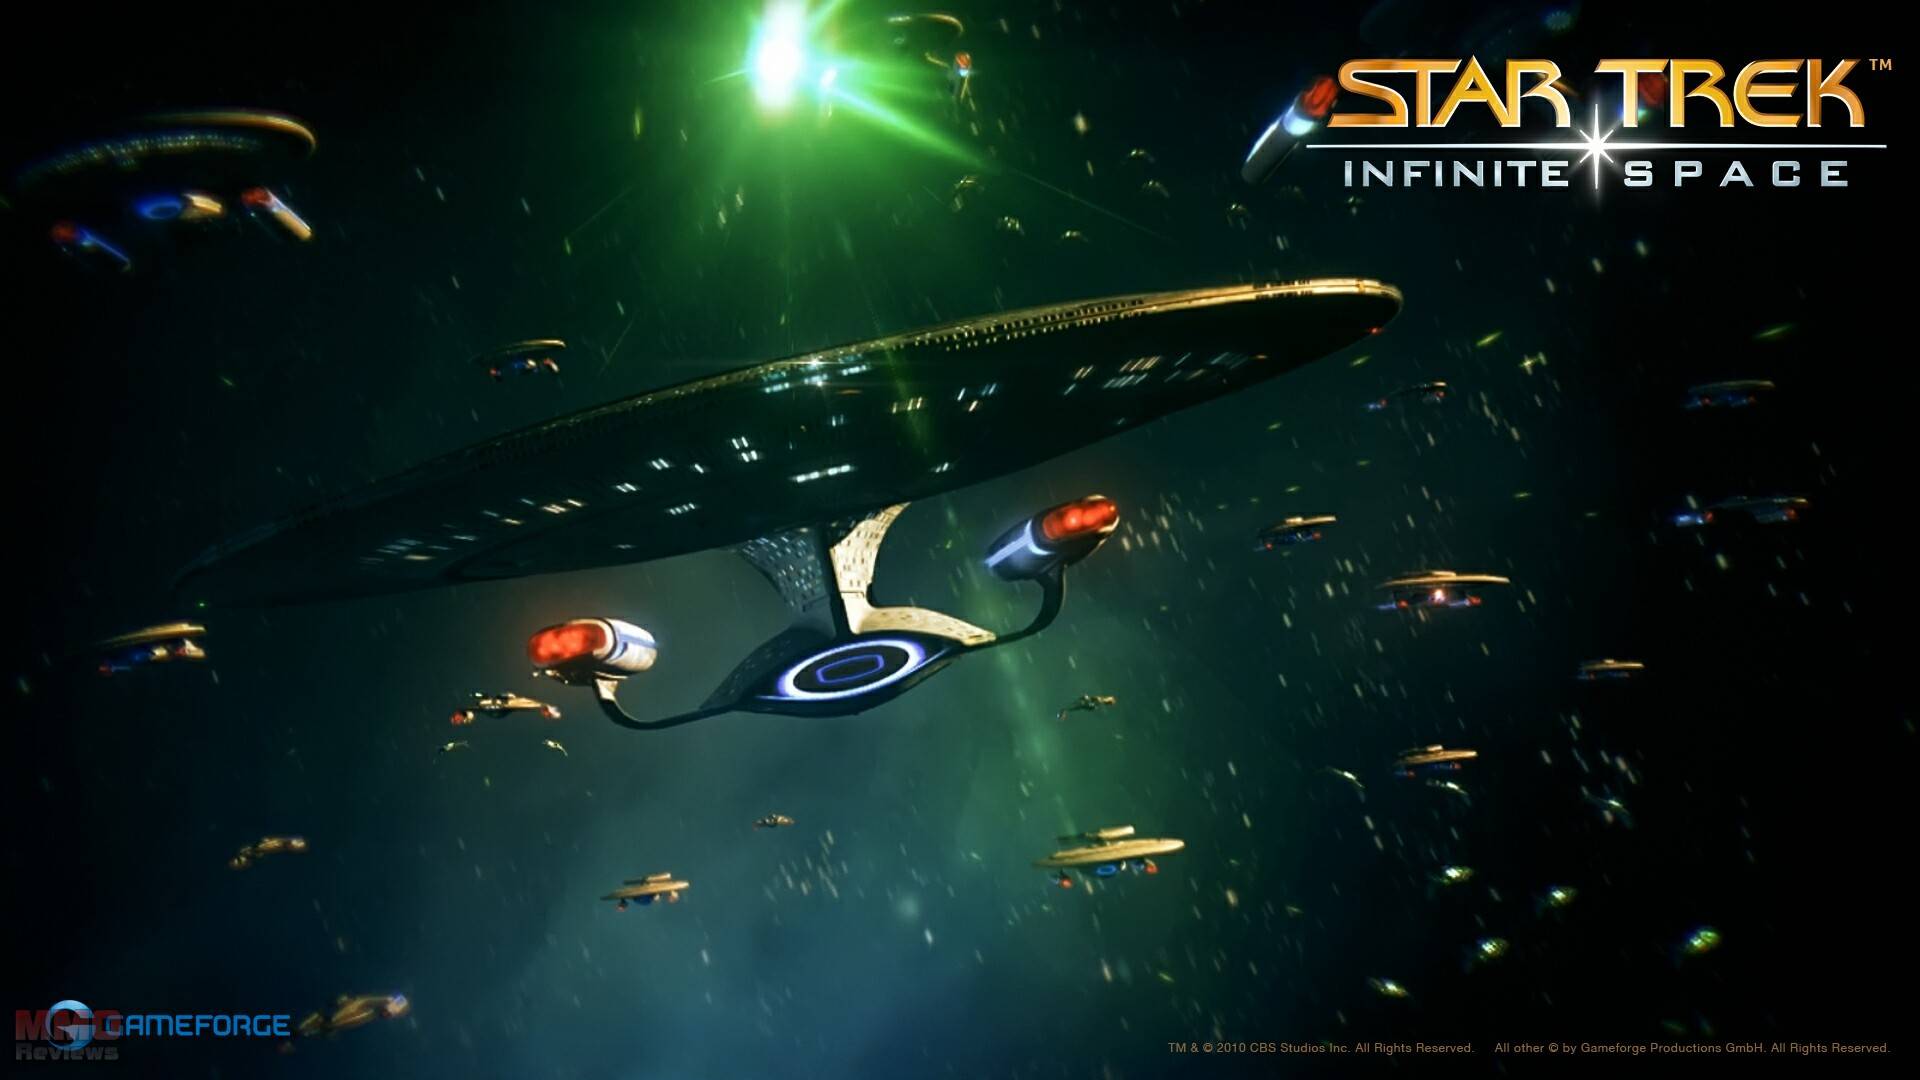 Today We Show This Star Trek Infinite Space Full HD Wallpaper Enjoy